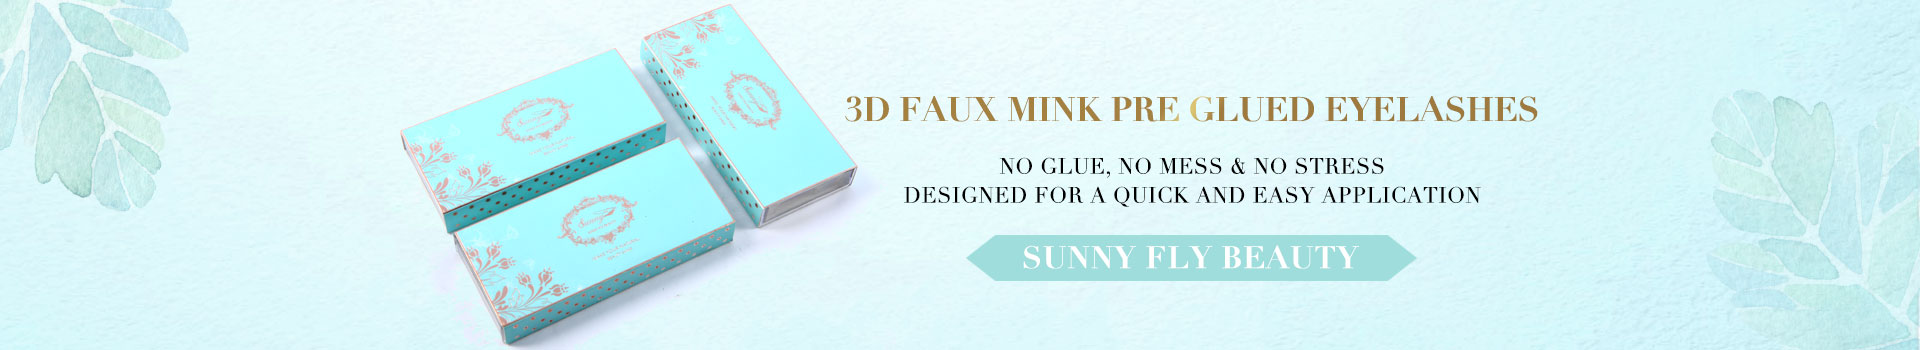 3D Faux Mink Pre Glued Eyelashes